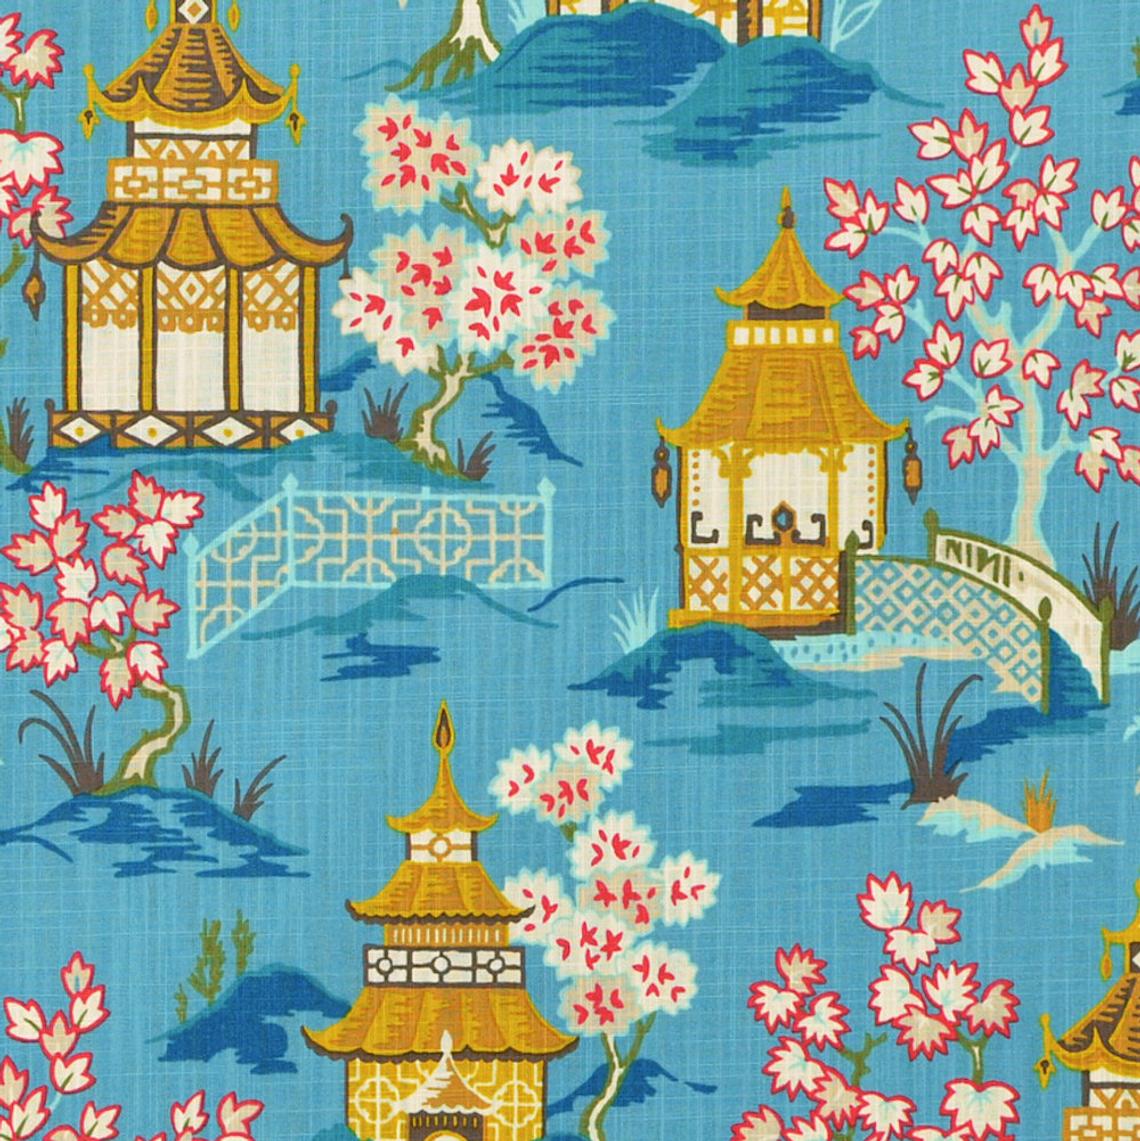 rod pocket curtain panels pair in shoji azure blue oriental toile multicolor chinoiserie